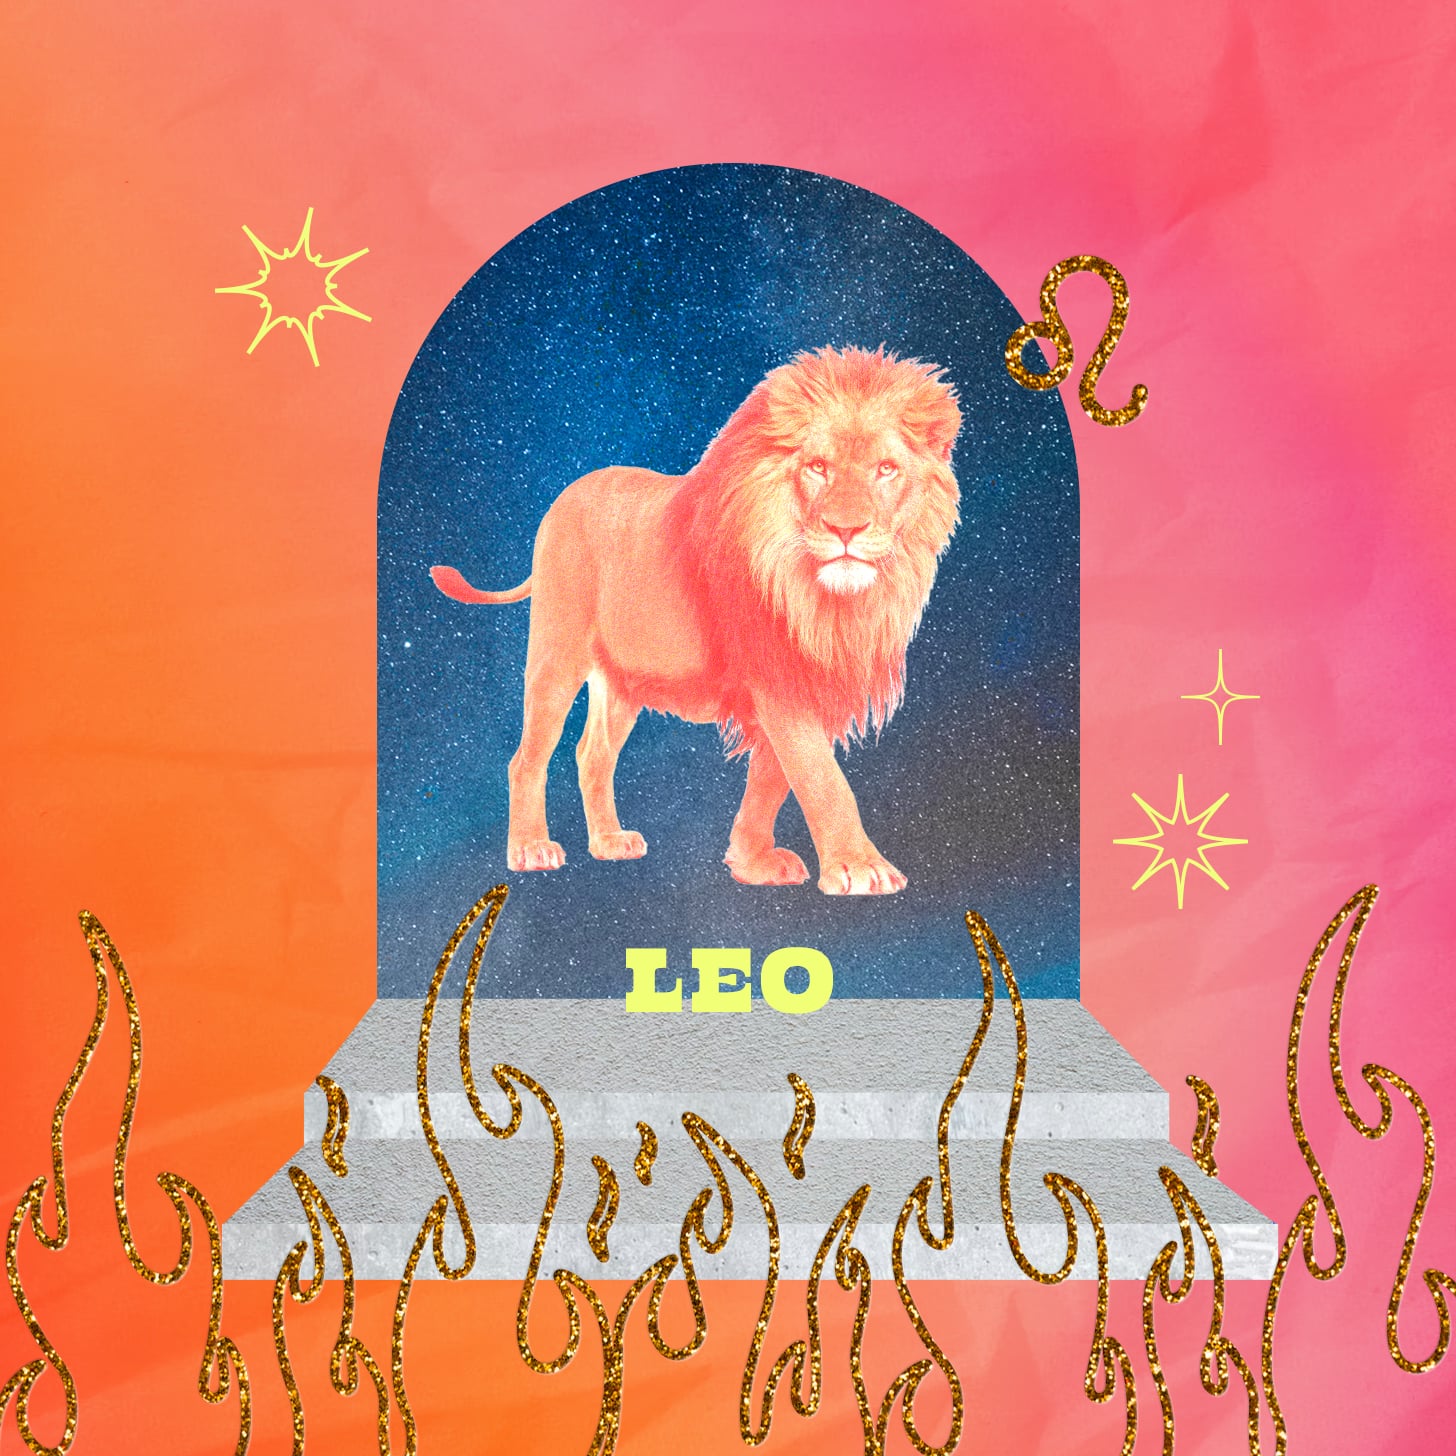 Leo weekly horoscope for December 11, 2022